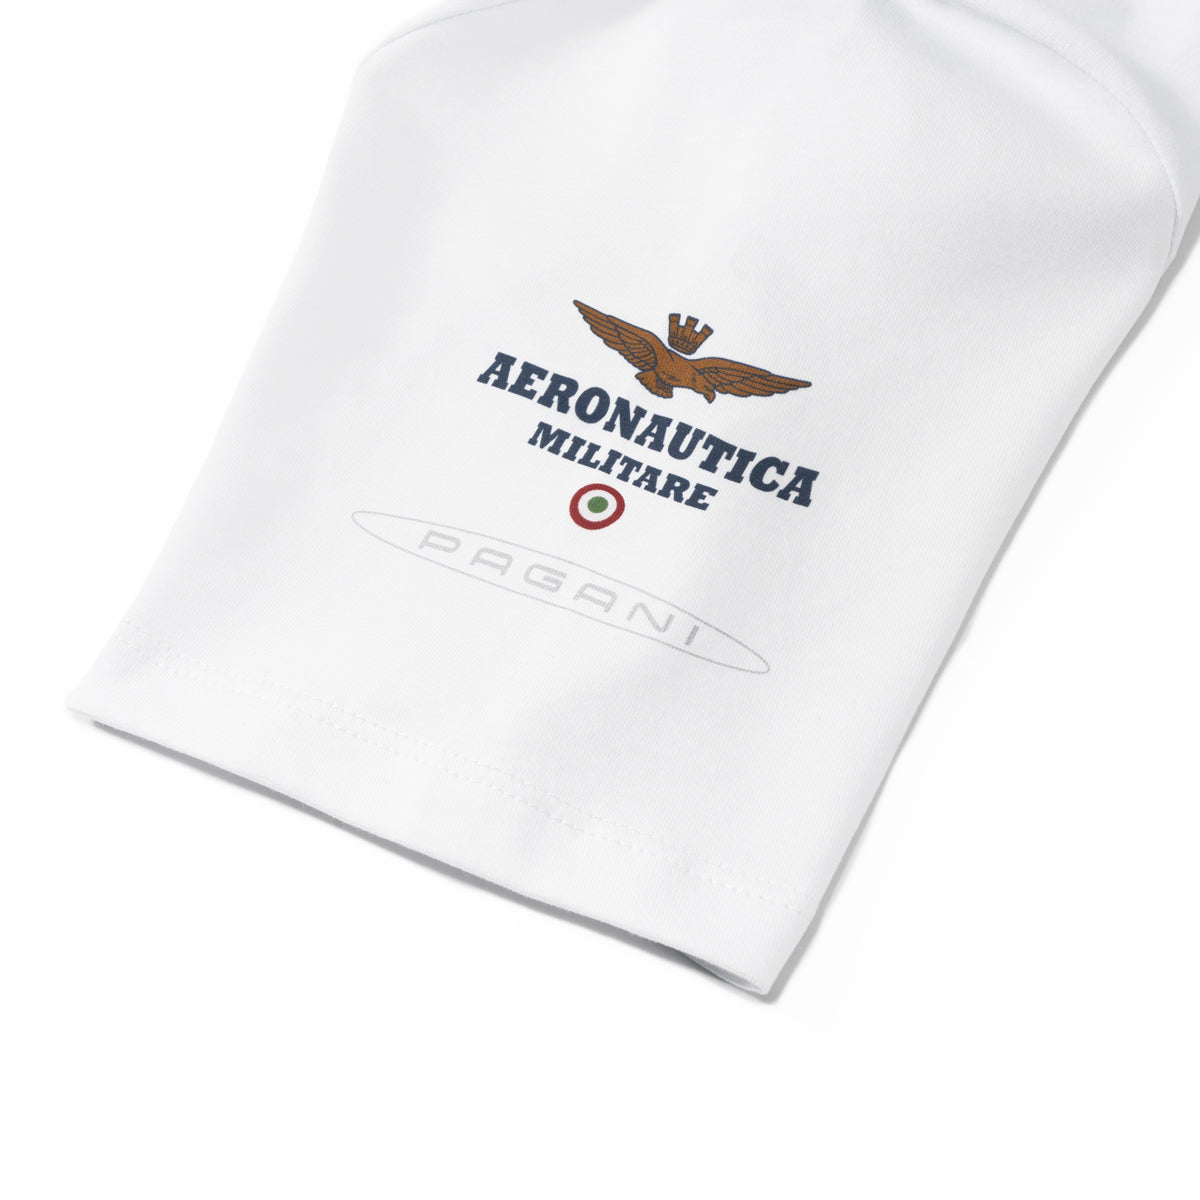 Camiseta Conmemorativa Blanca para Hombre | Huayra Tricolore Capsule